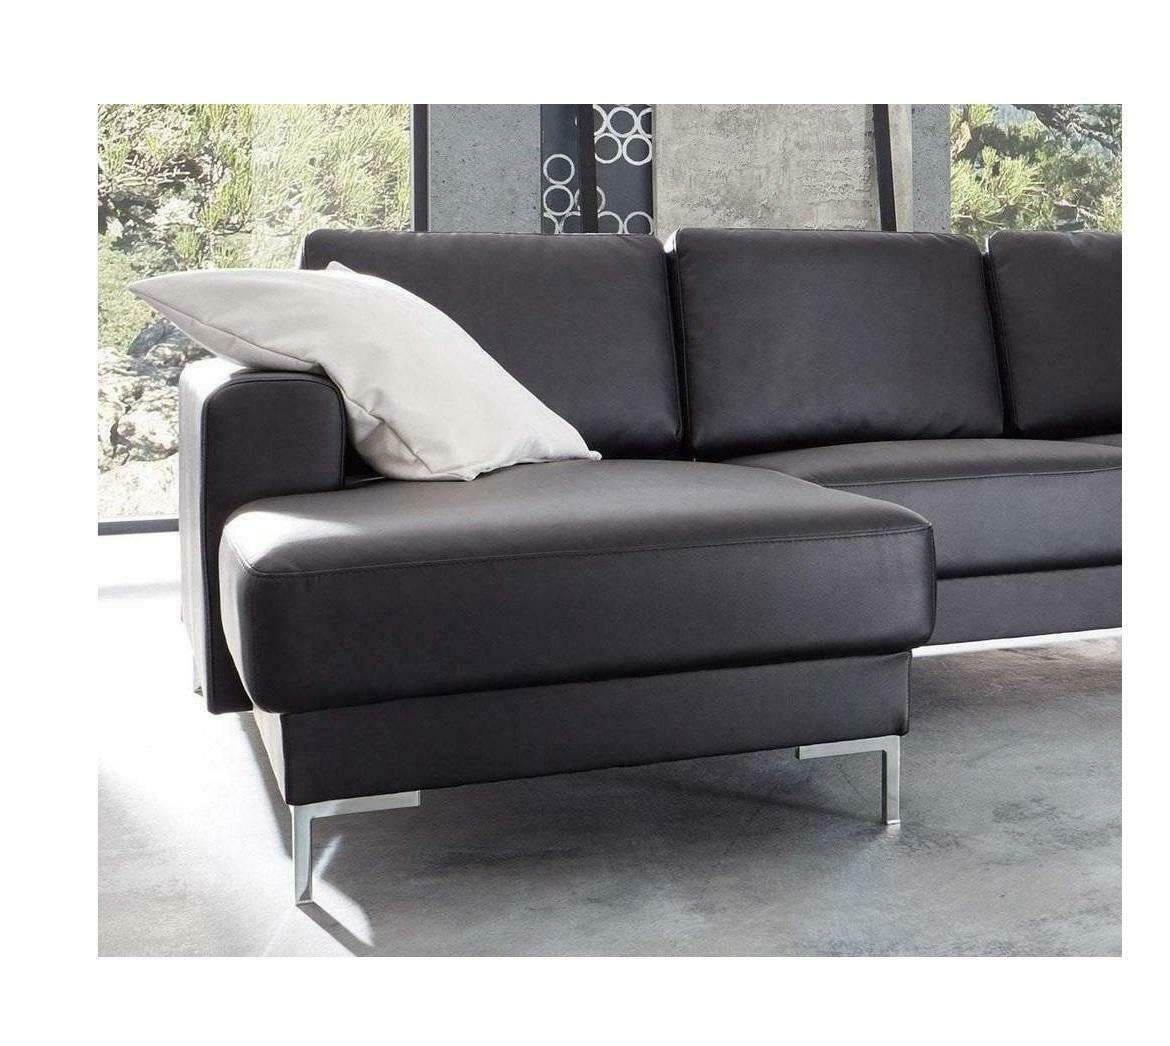 JVmoebel Sofa Polstermöbel Made Luxus Wohnlandschaft in Neu, Europe Sofa Couch schwarzes U-Form